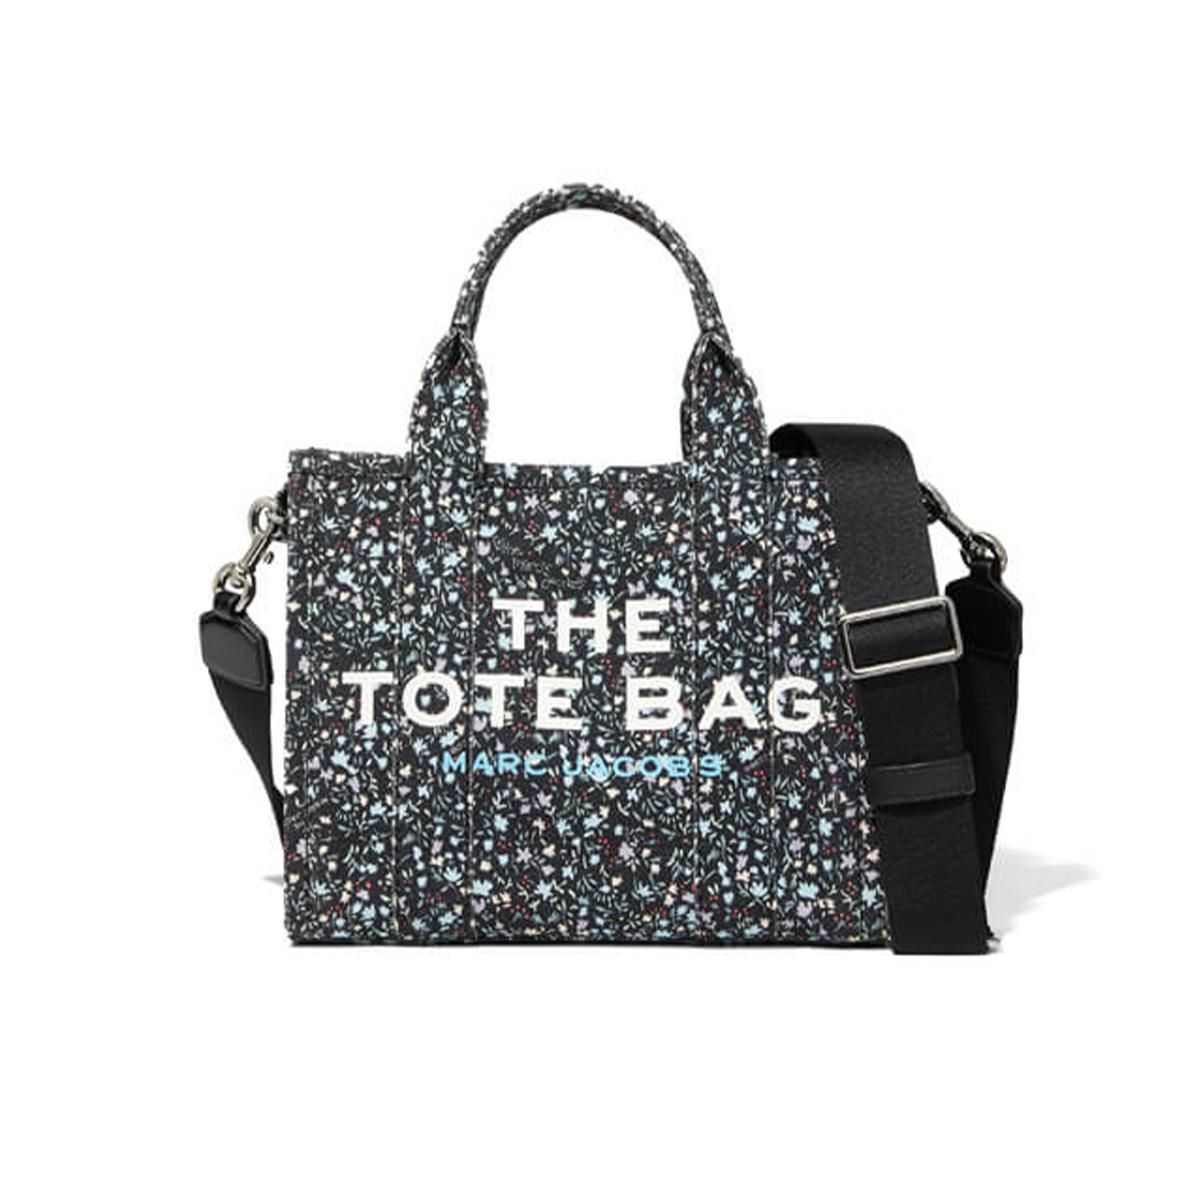 The Ditsy Floral Mini Traveler Tote Bag